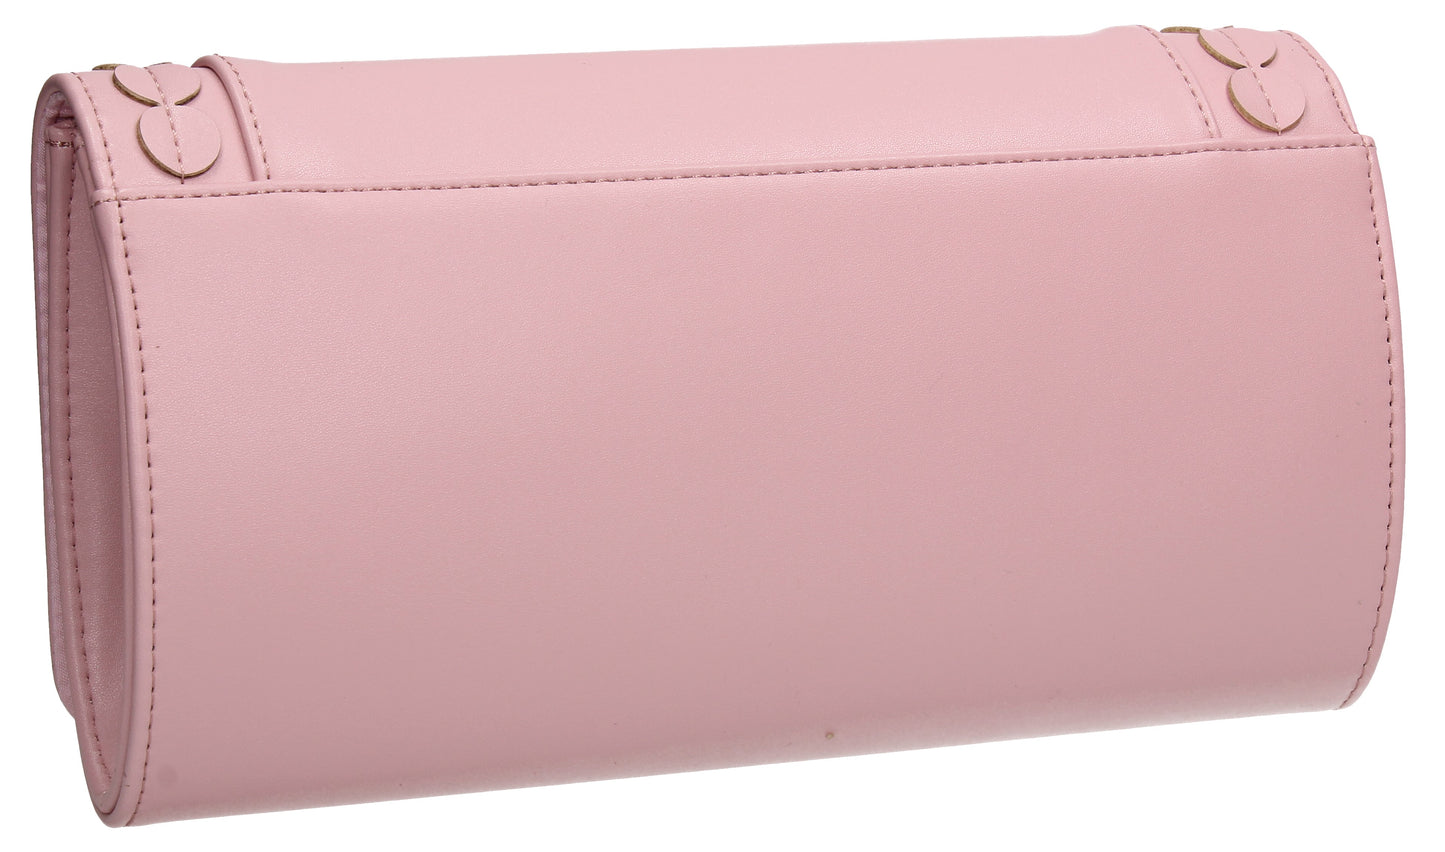 SWANKYSWANS Macy Clutch Bag Pink Cute Cheap Clutch Bag For Weddings School and Work